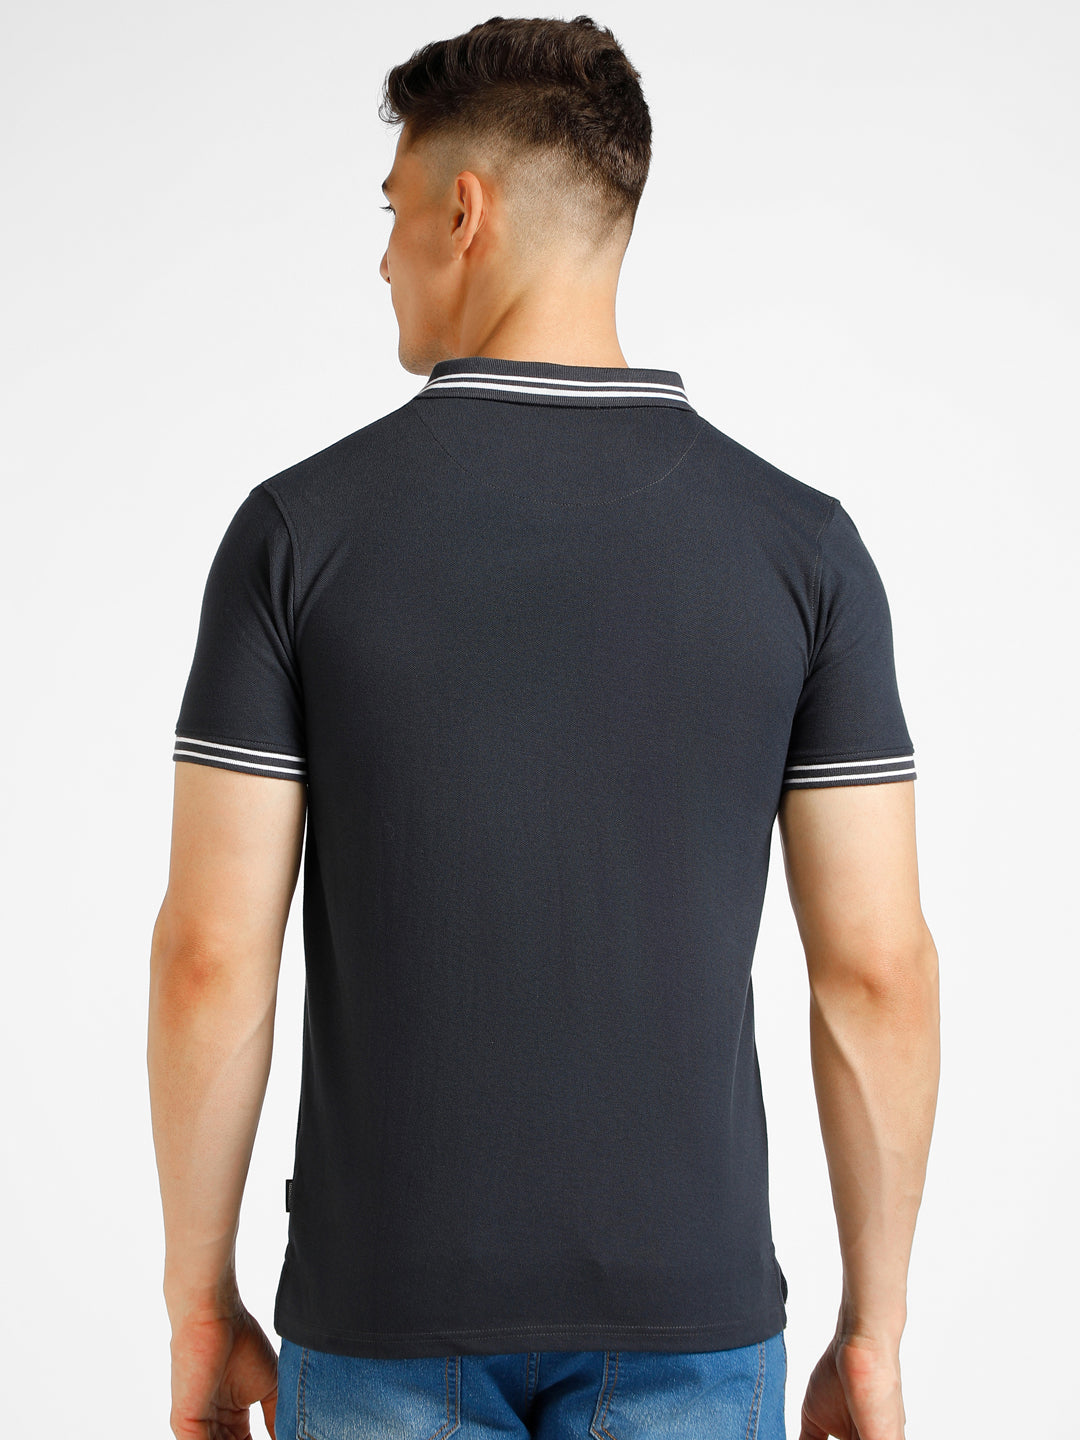 Urbano Fashion Men's Grey Solid Slim Fit Half Sleeve Cotton Polo T-Shirt